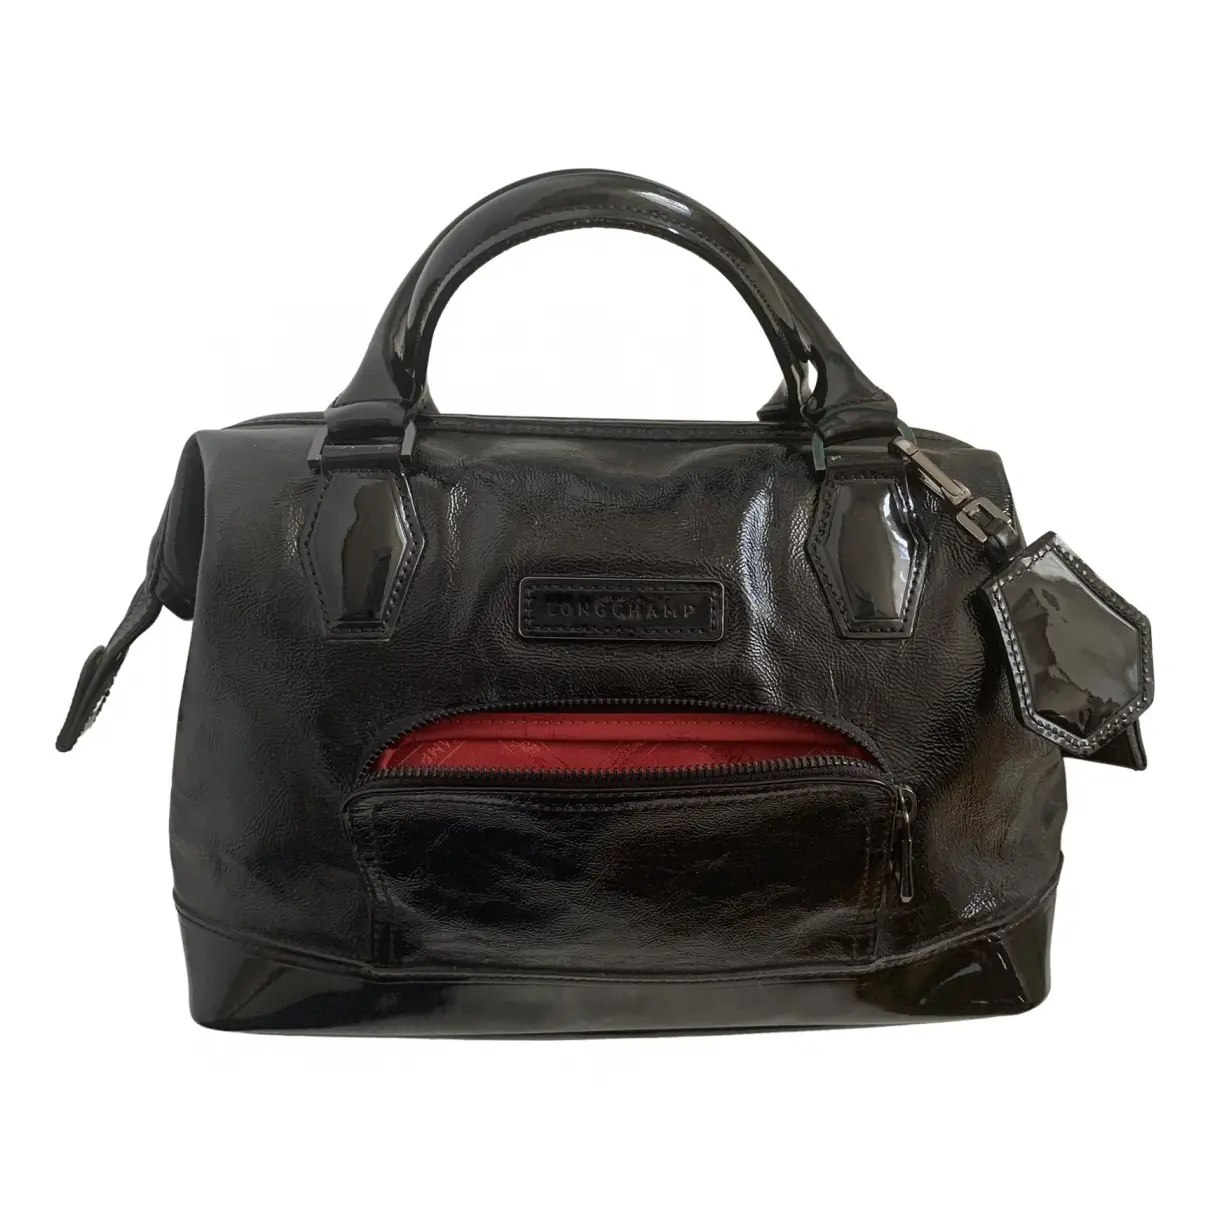 Légende patent leather handbag Longchamp